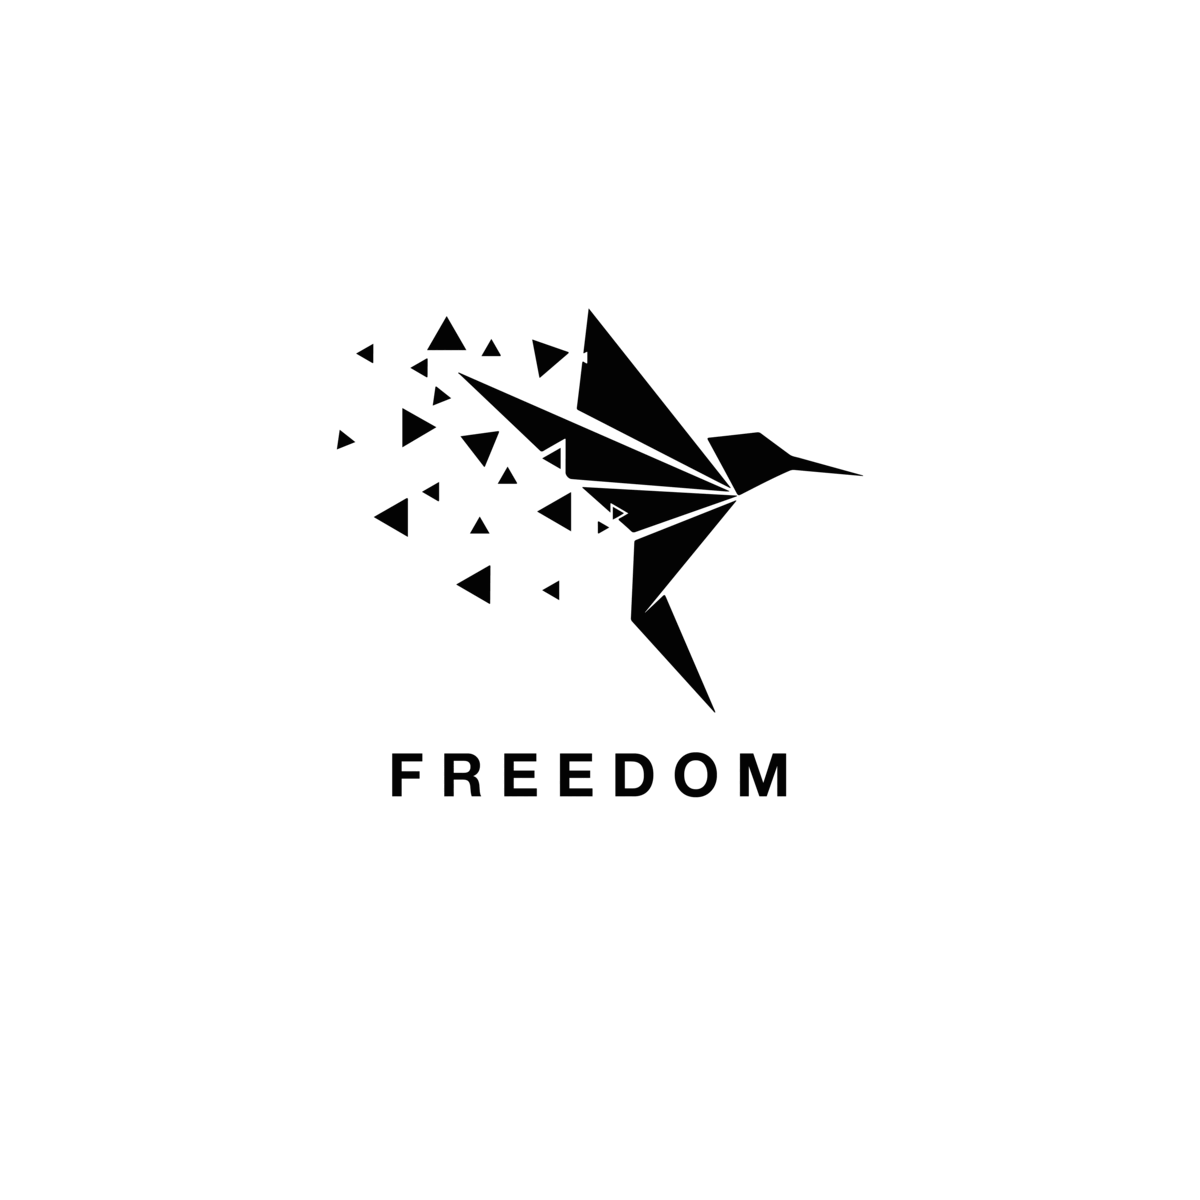 FREEDOM Logo by karim milzam on Dribbble